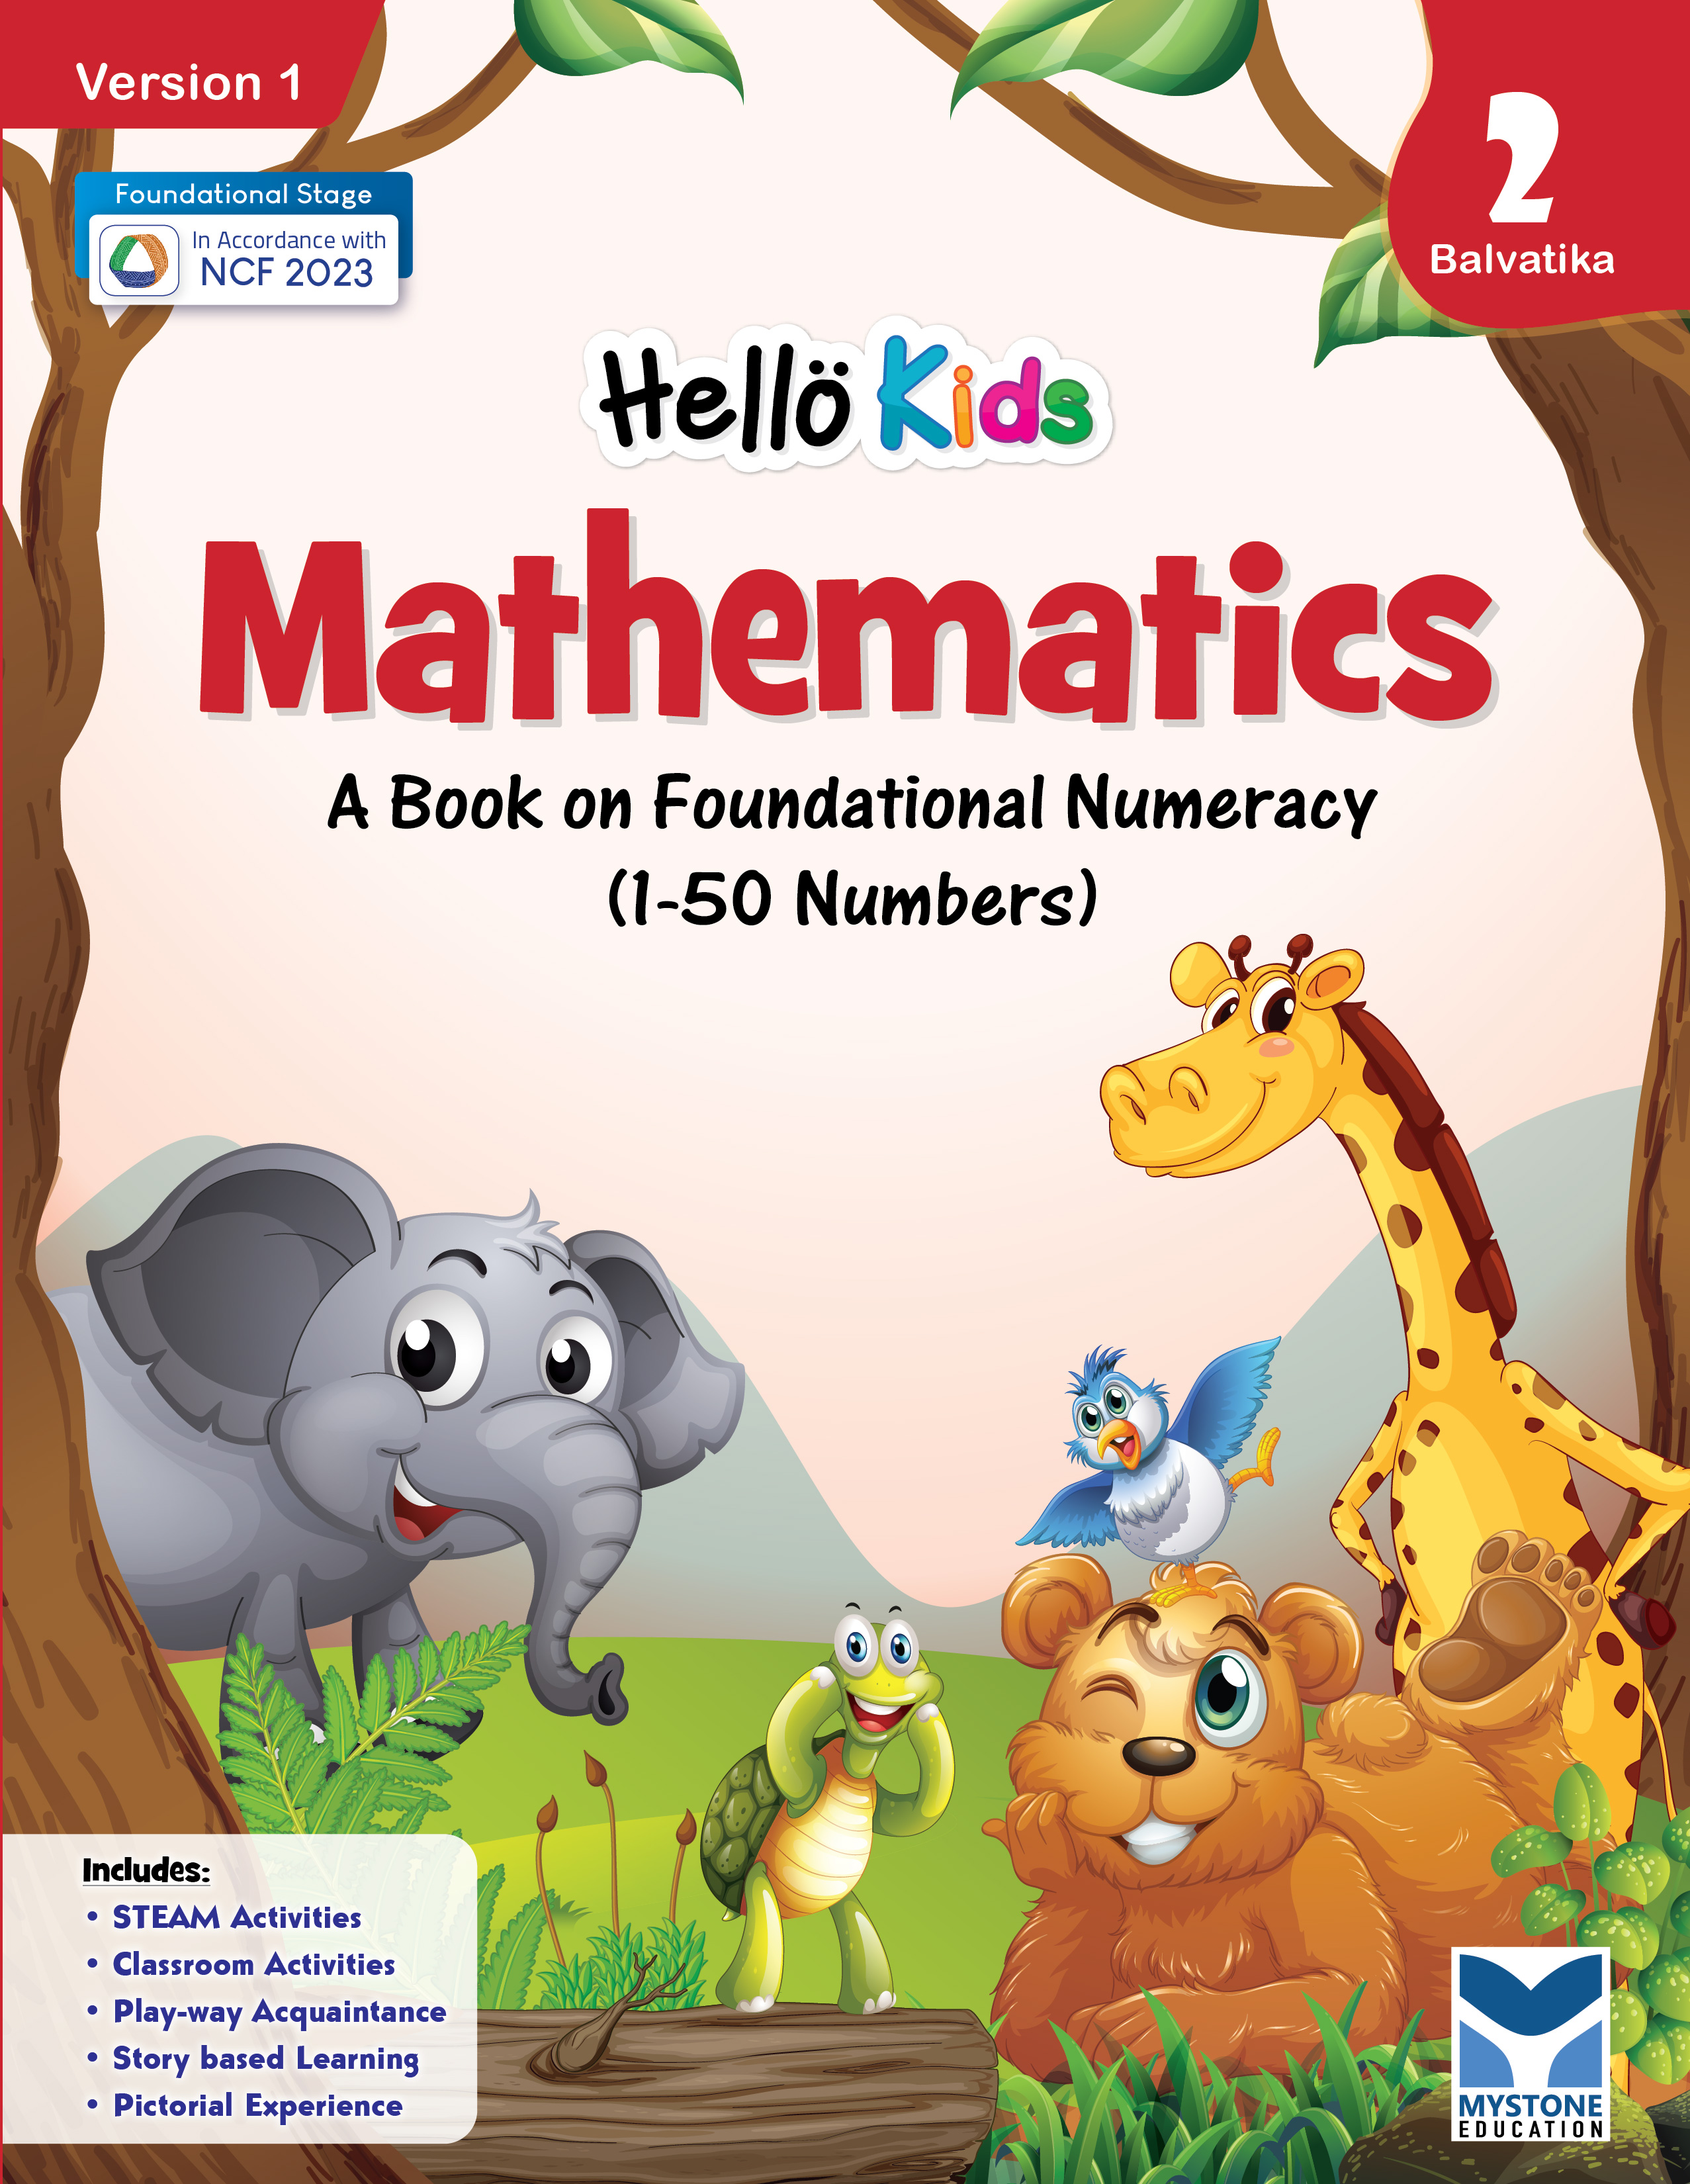 Hello Kids Mathematics Balvatika 2 Ver. 1